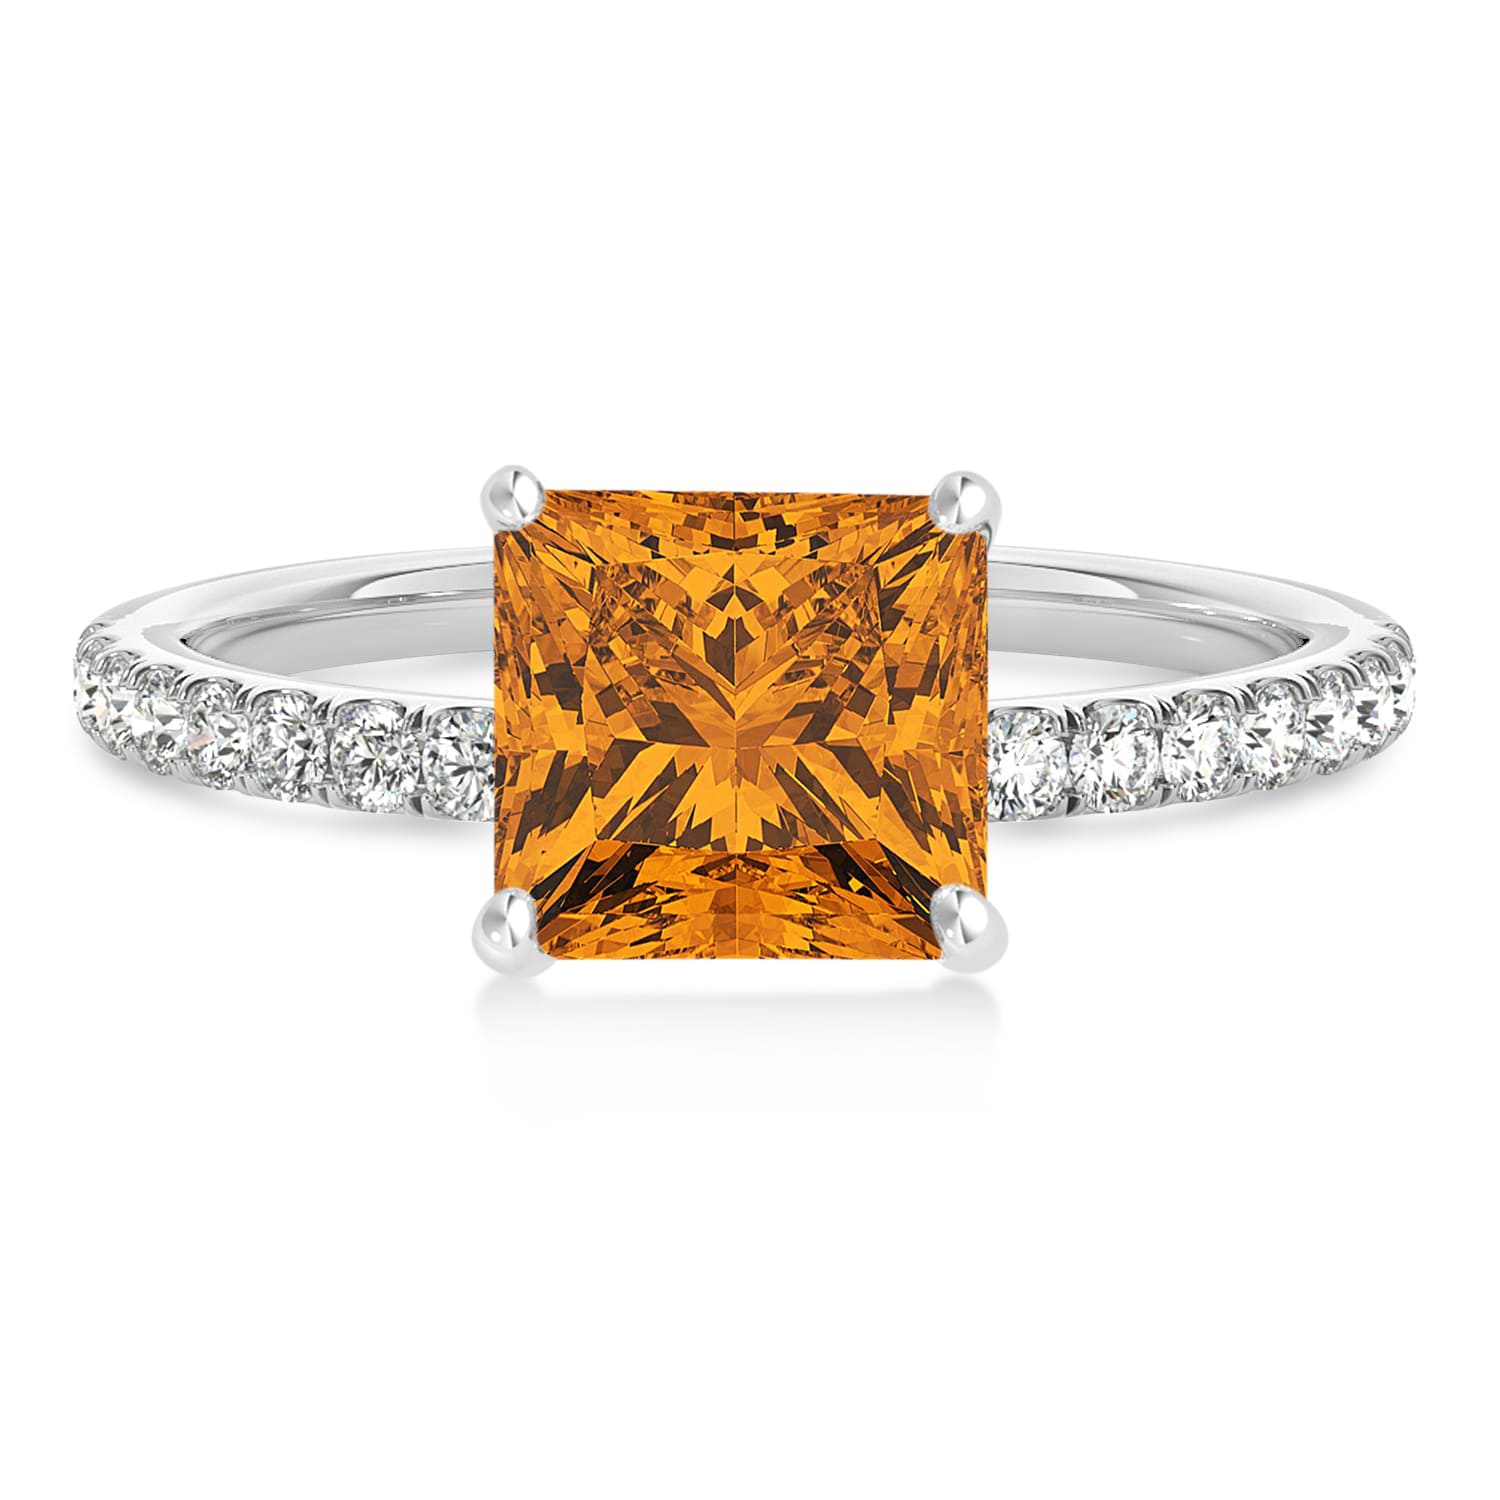 Princess Citrine & Diamond Single Row Hidden Halo Engagement Ring 14k White Gold (0.81ct)